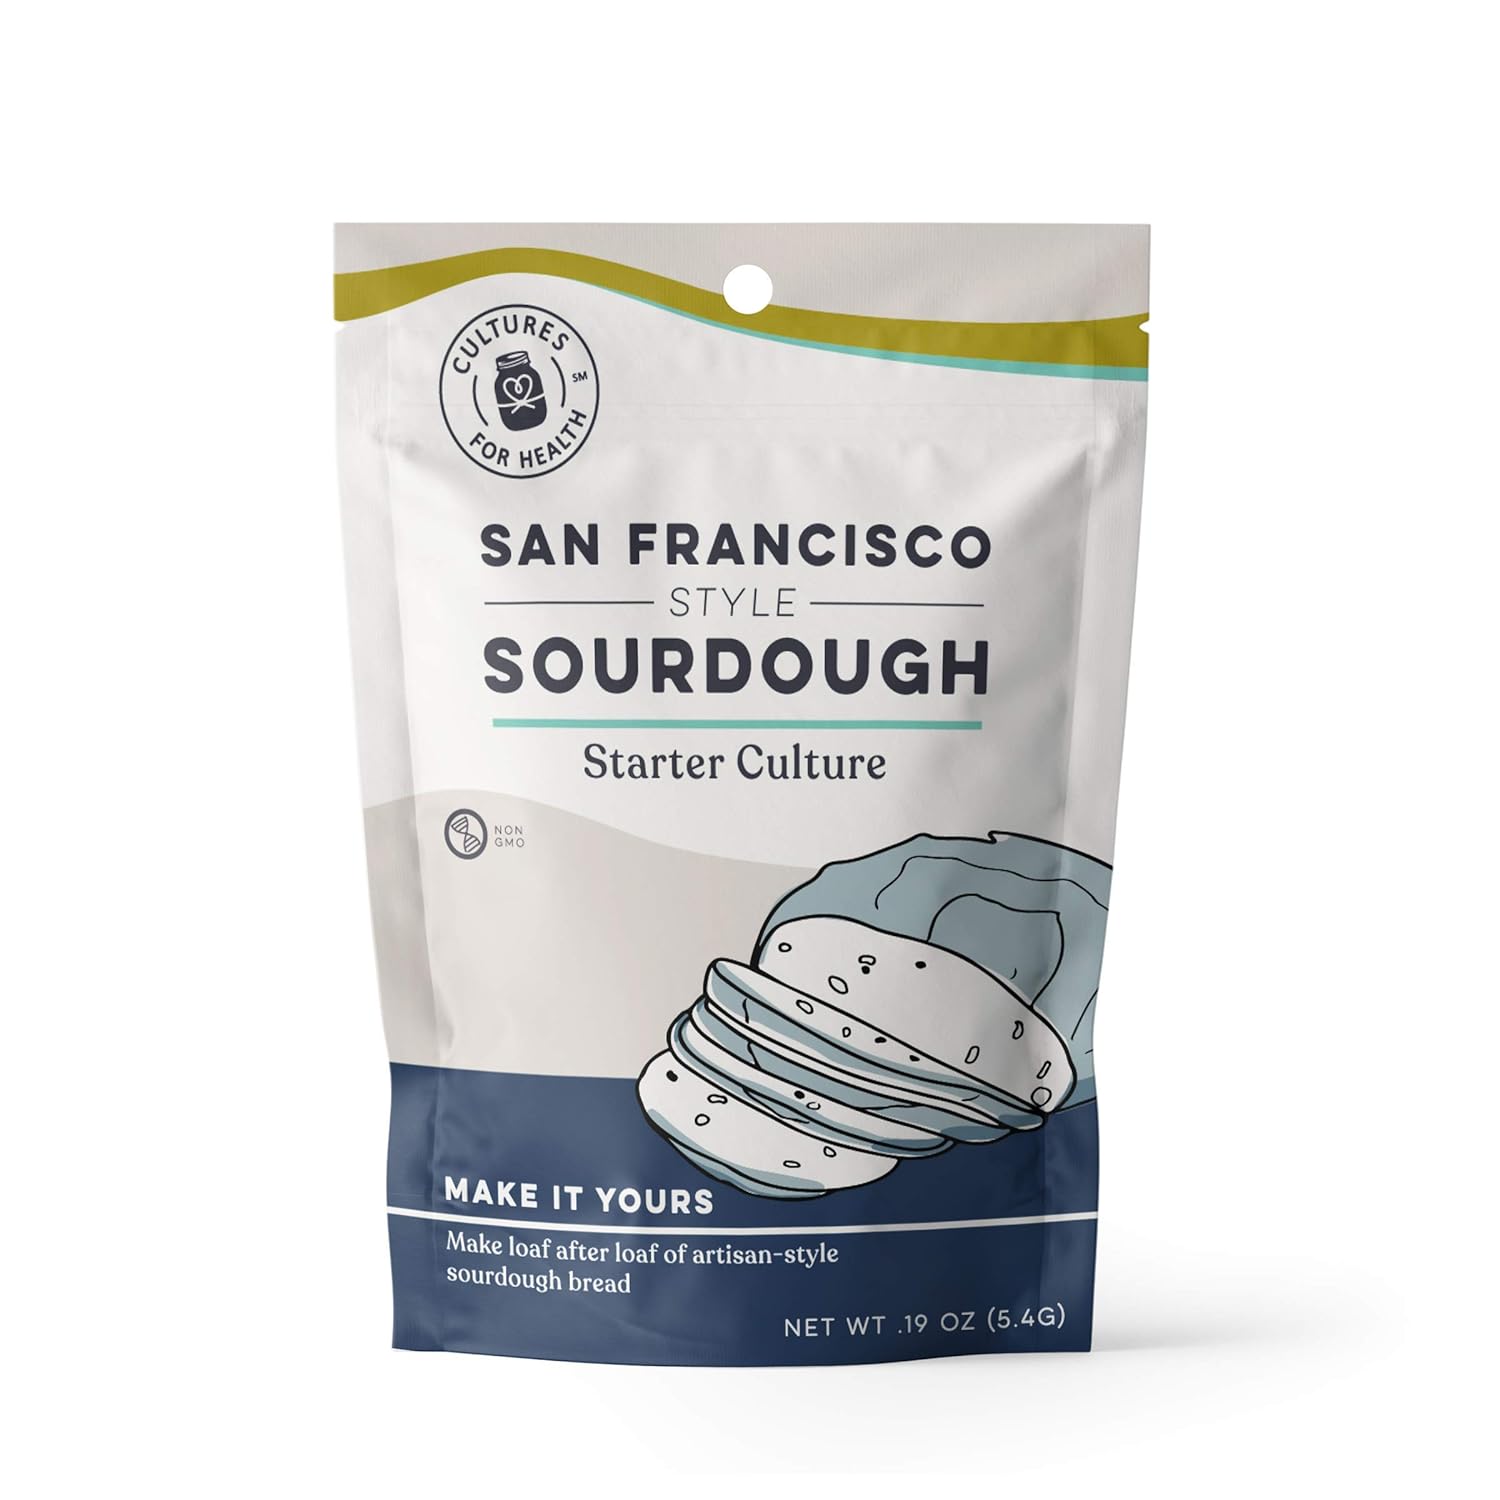 Cultures for Health San Francisco Sourdough Style Starter Culture